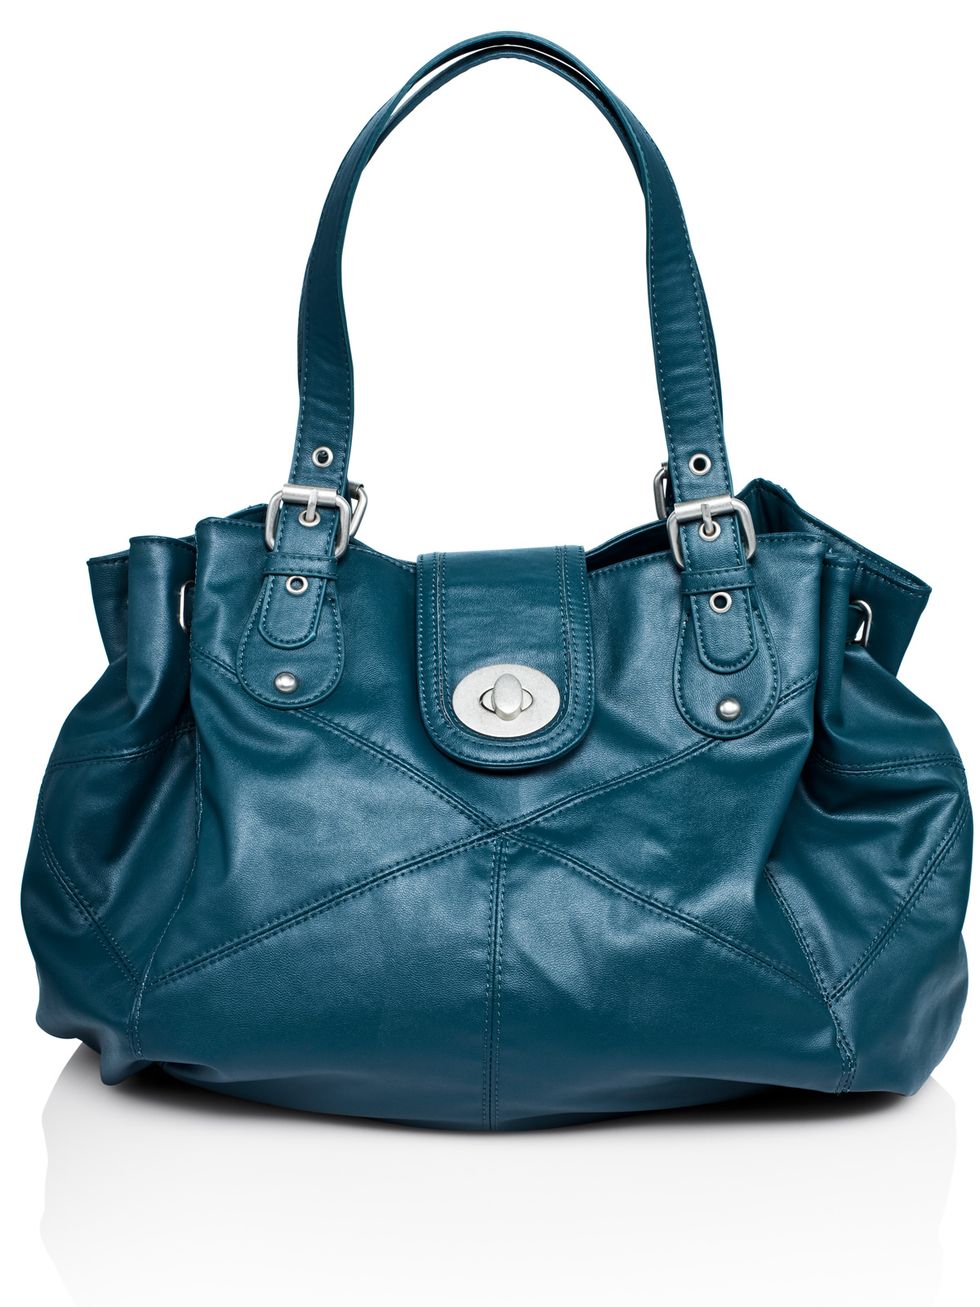 Handbag, Bag, Blue, Product, Shoulder bag, Fashion accessory, Aqua, Turquoise, Green, Leather, 